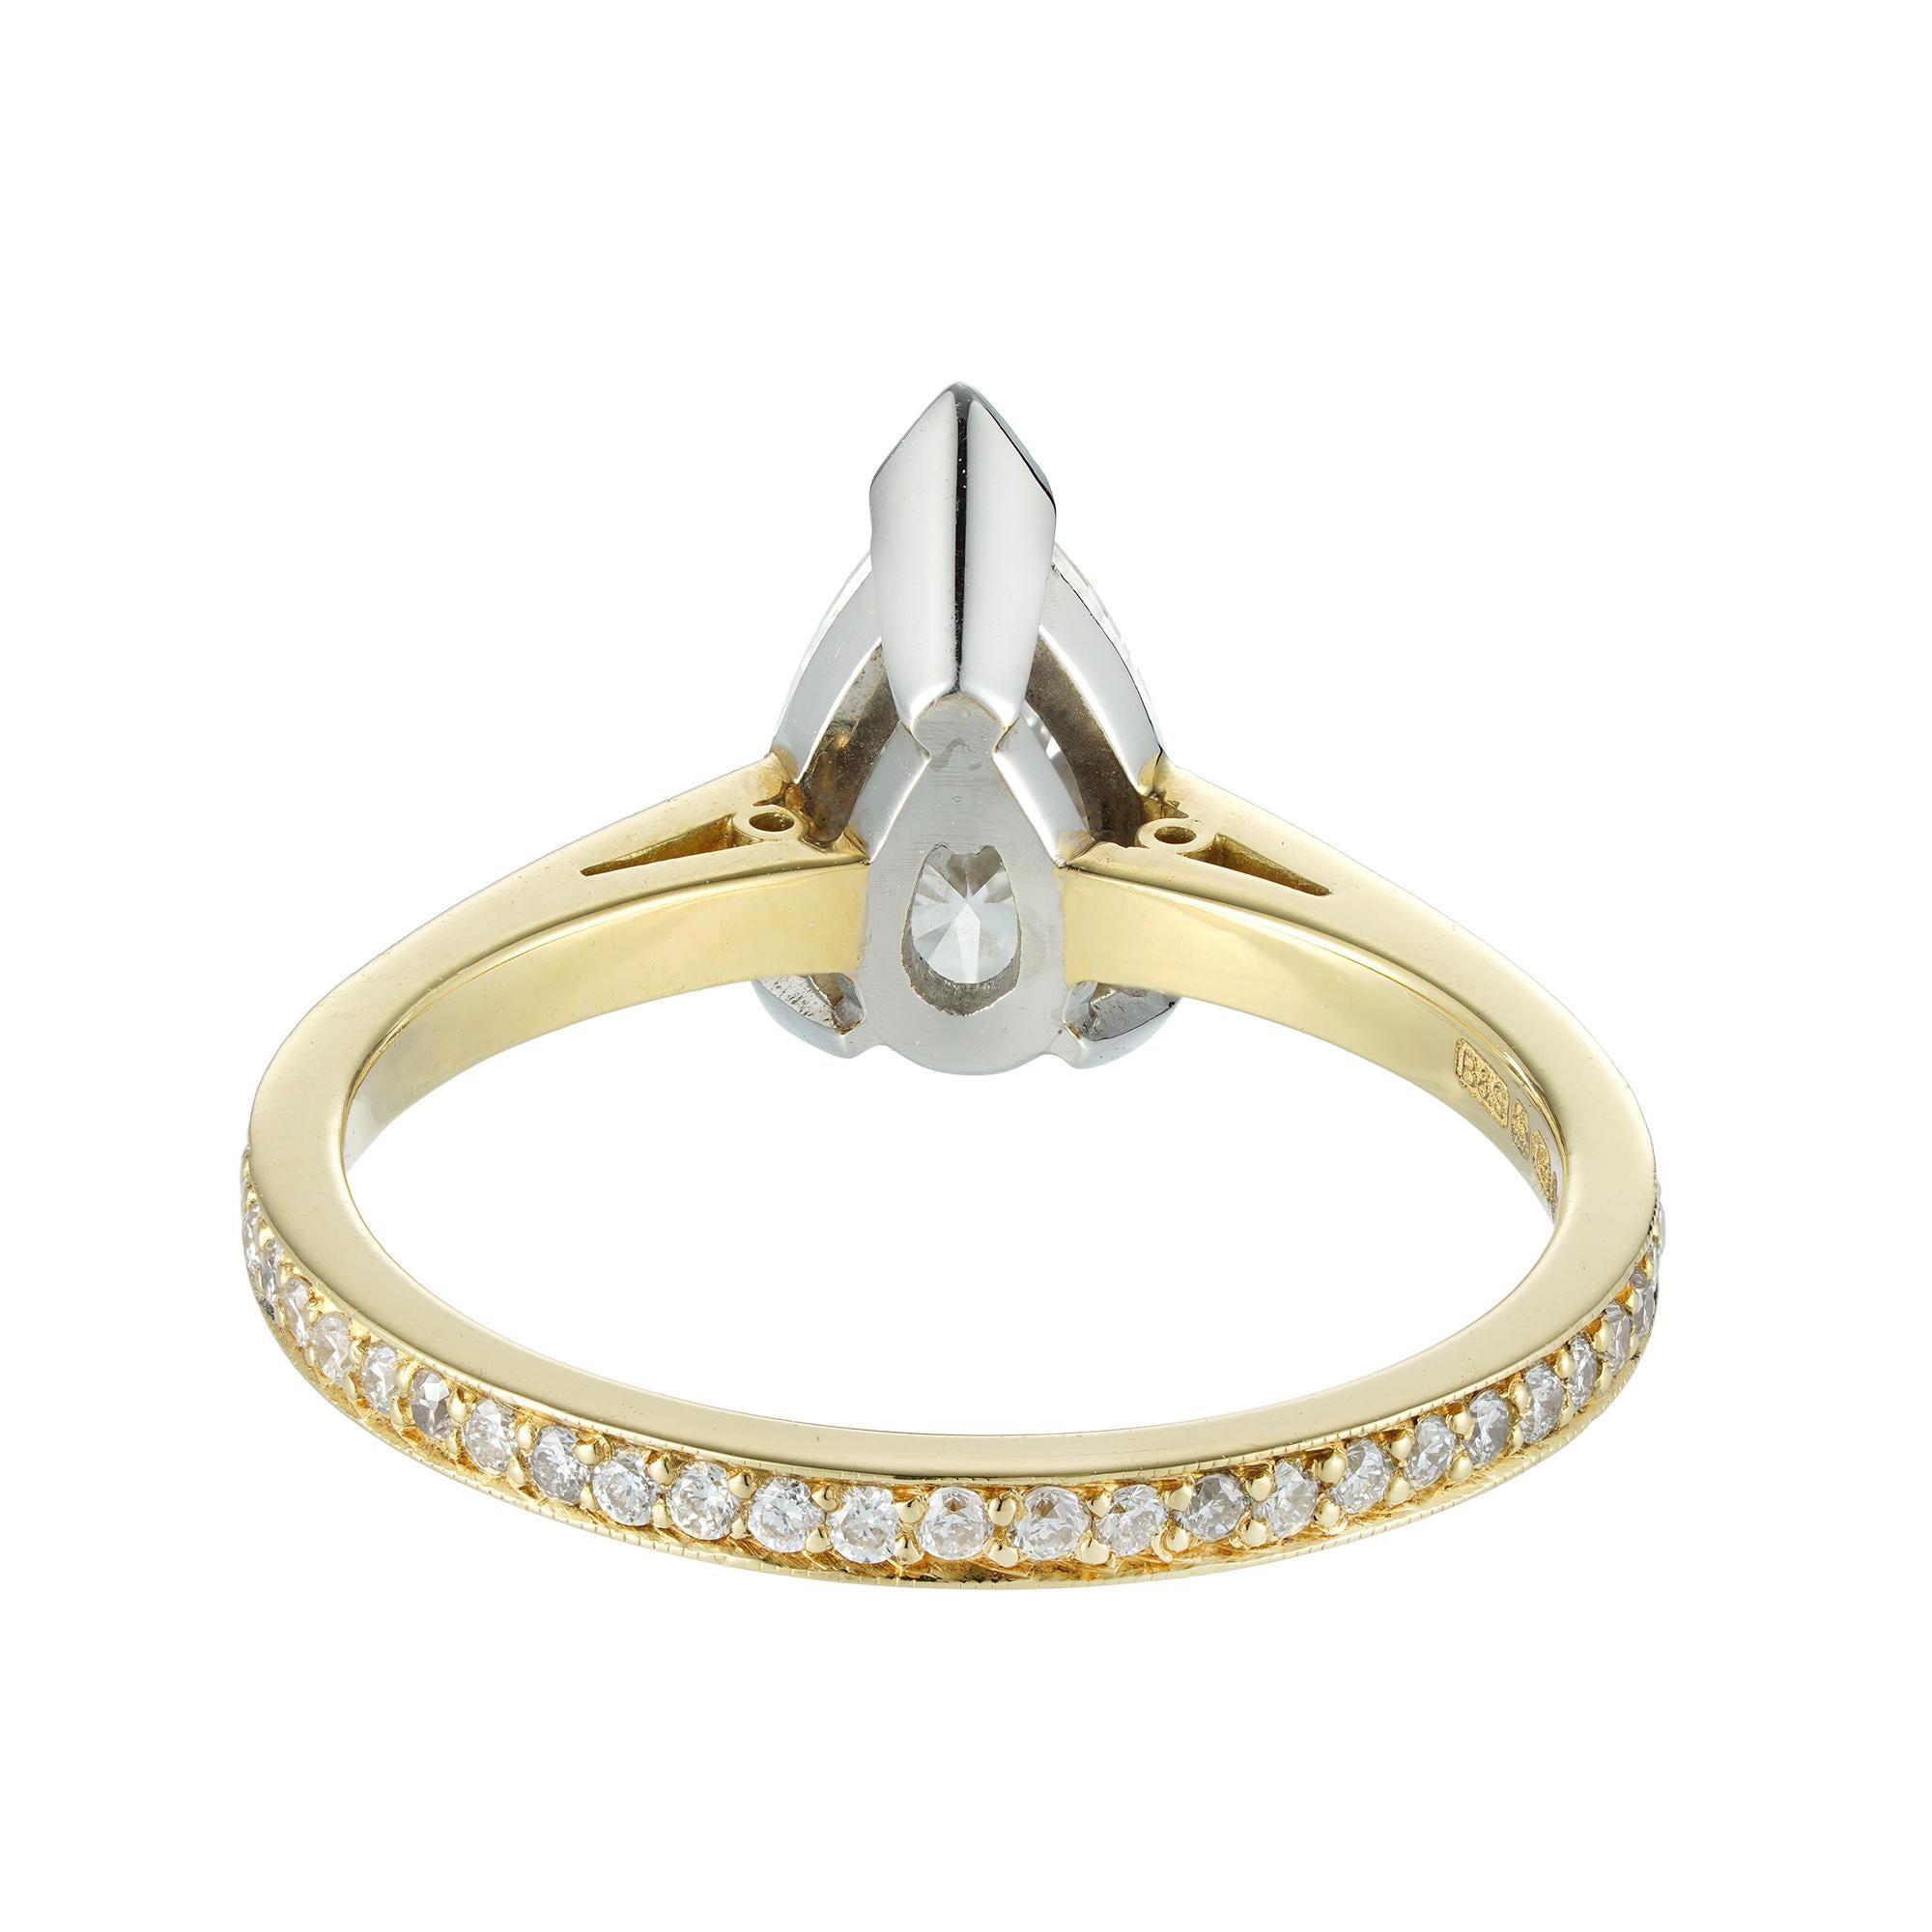 1 carat pear shaped diamond ring